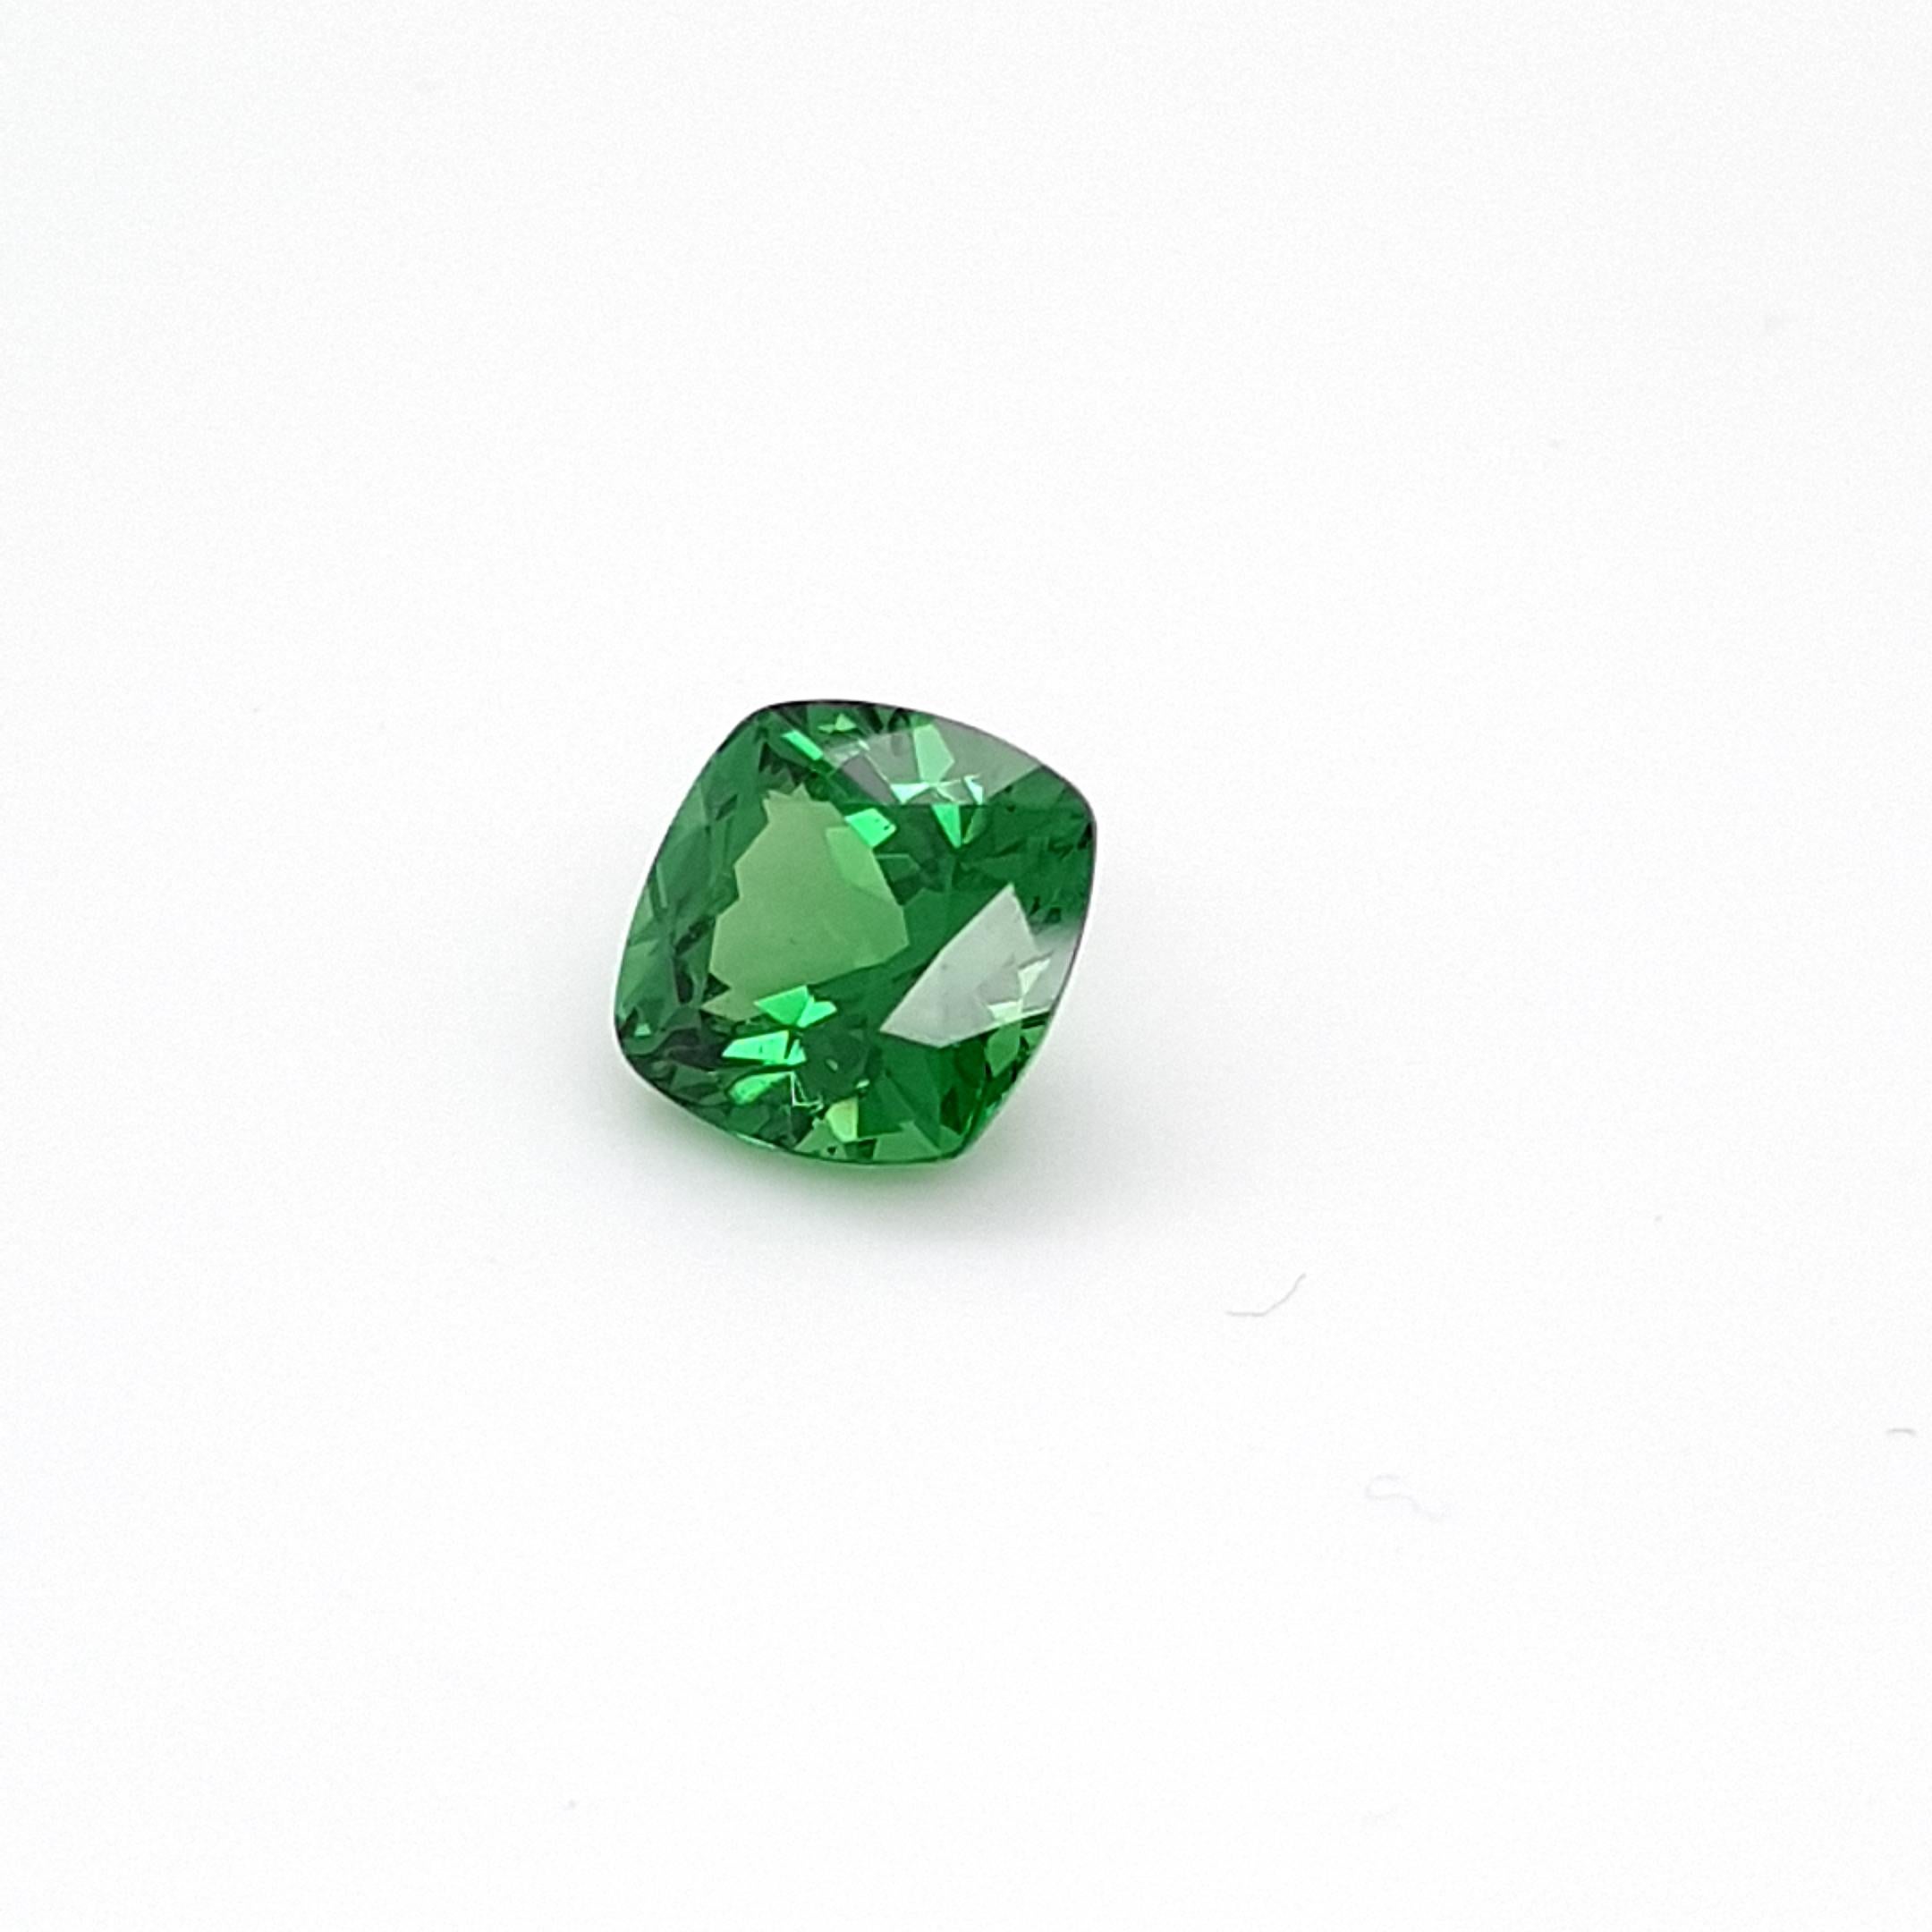 Intense Green Tsavorite Garnet, Faceted Gem, 4, 61 ct., loose Gemstone For Sale 1